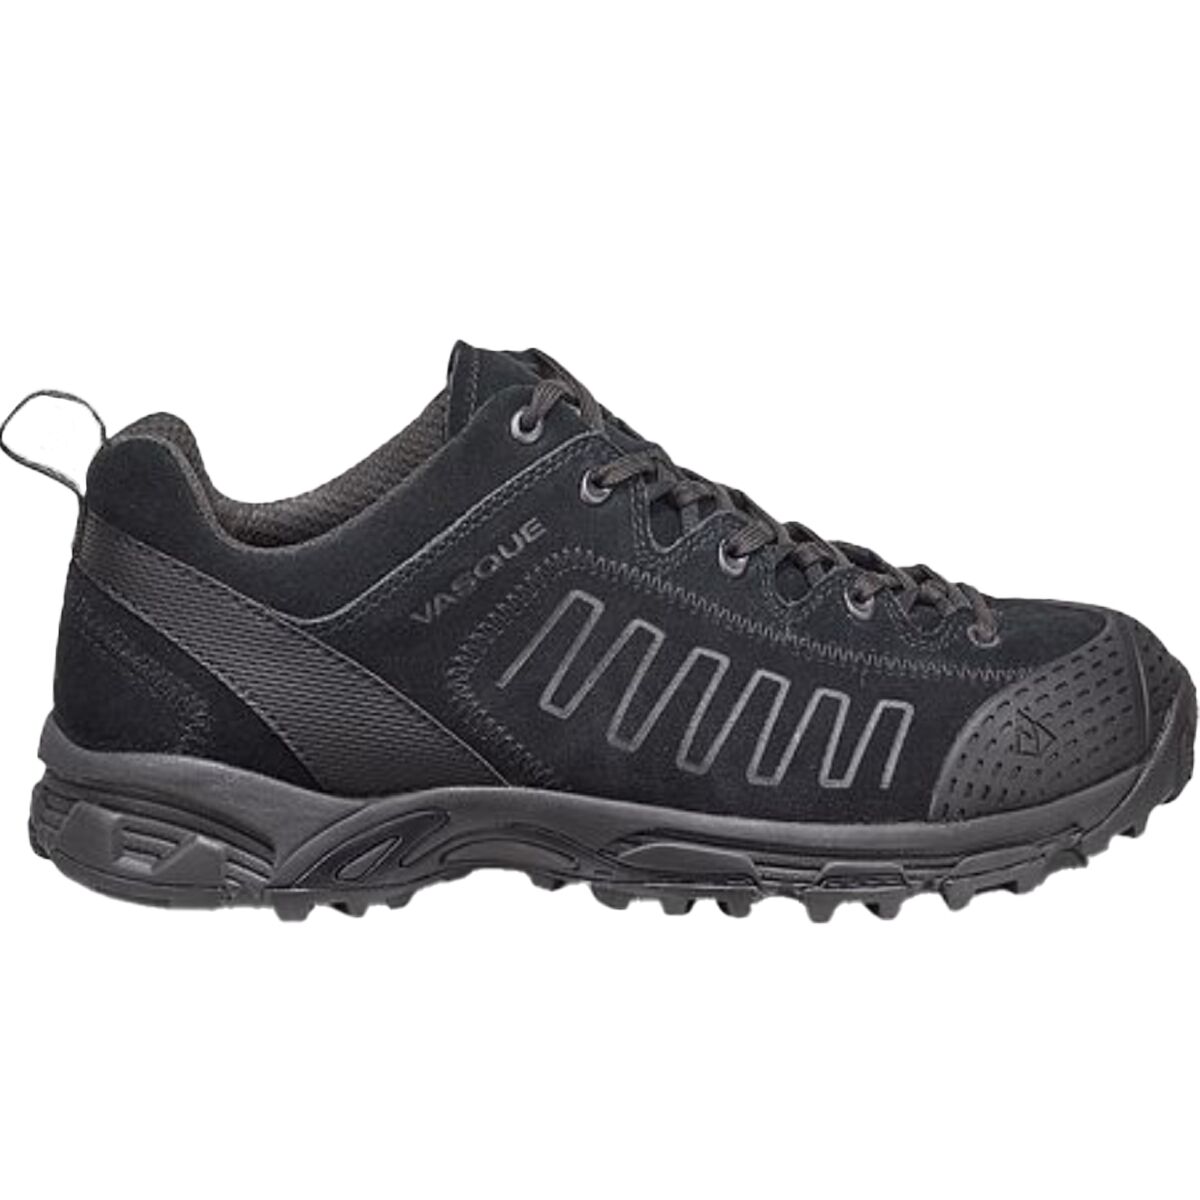 Vasque Juxt Hiking Shoe - Men's | Backcountry.com